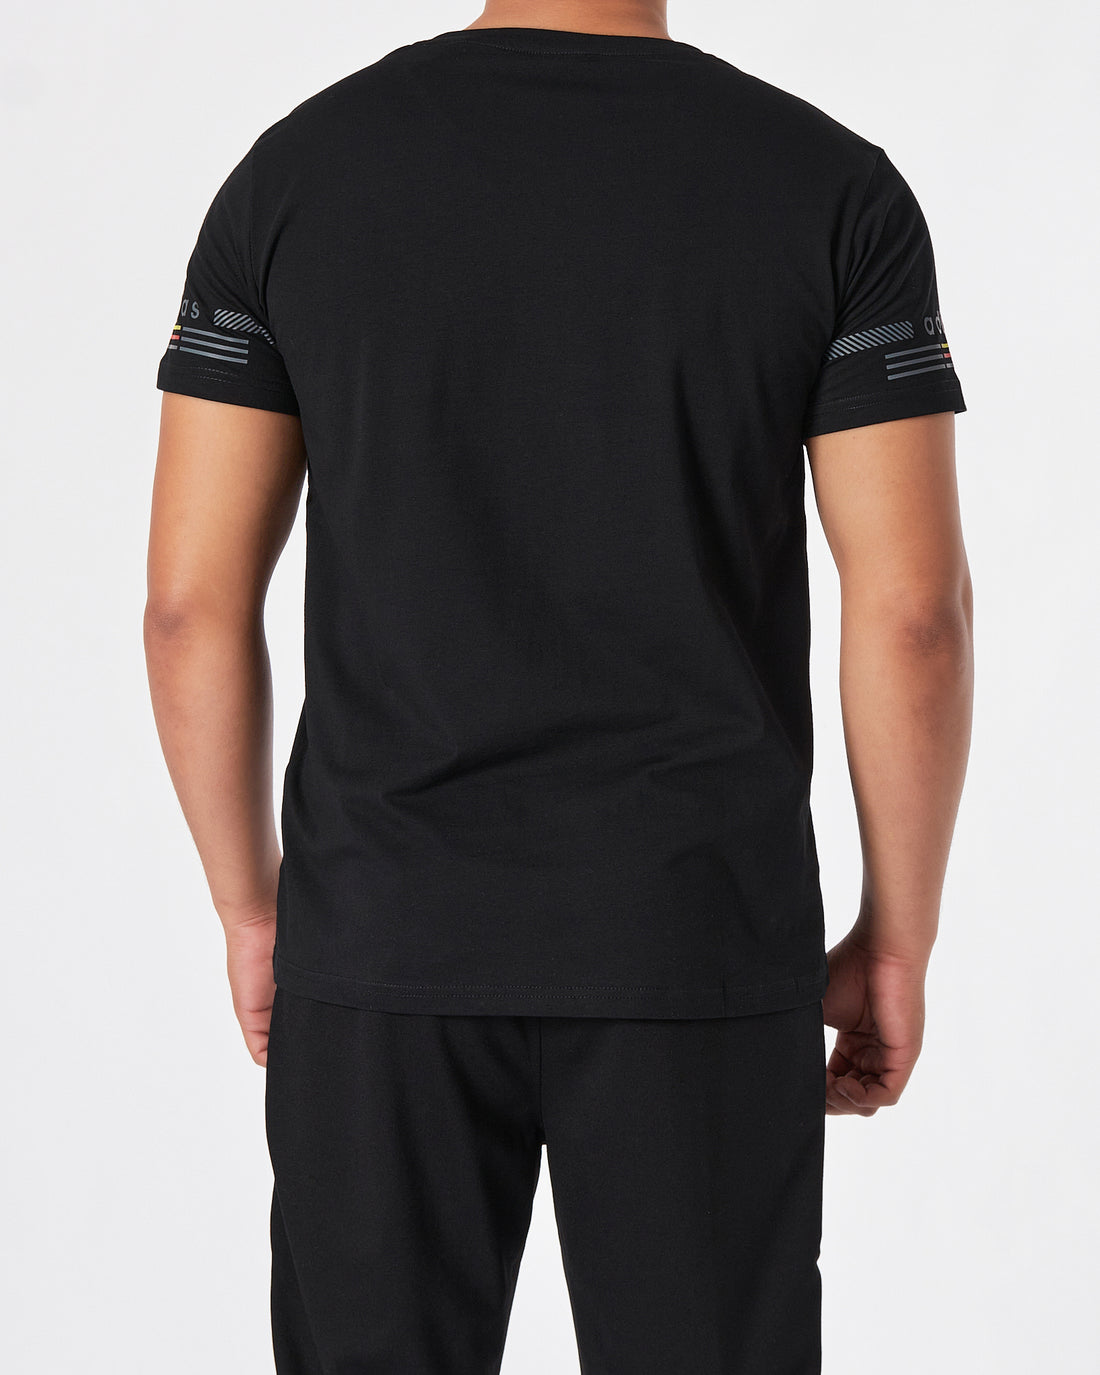 ADI Logo Printed Men Black T-Shirt 14.90